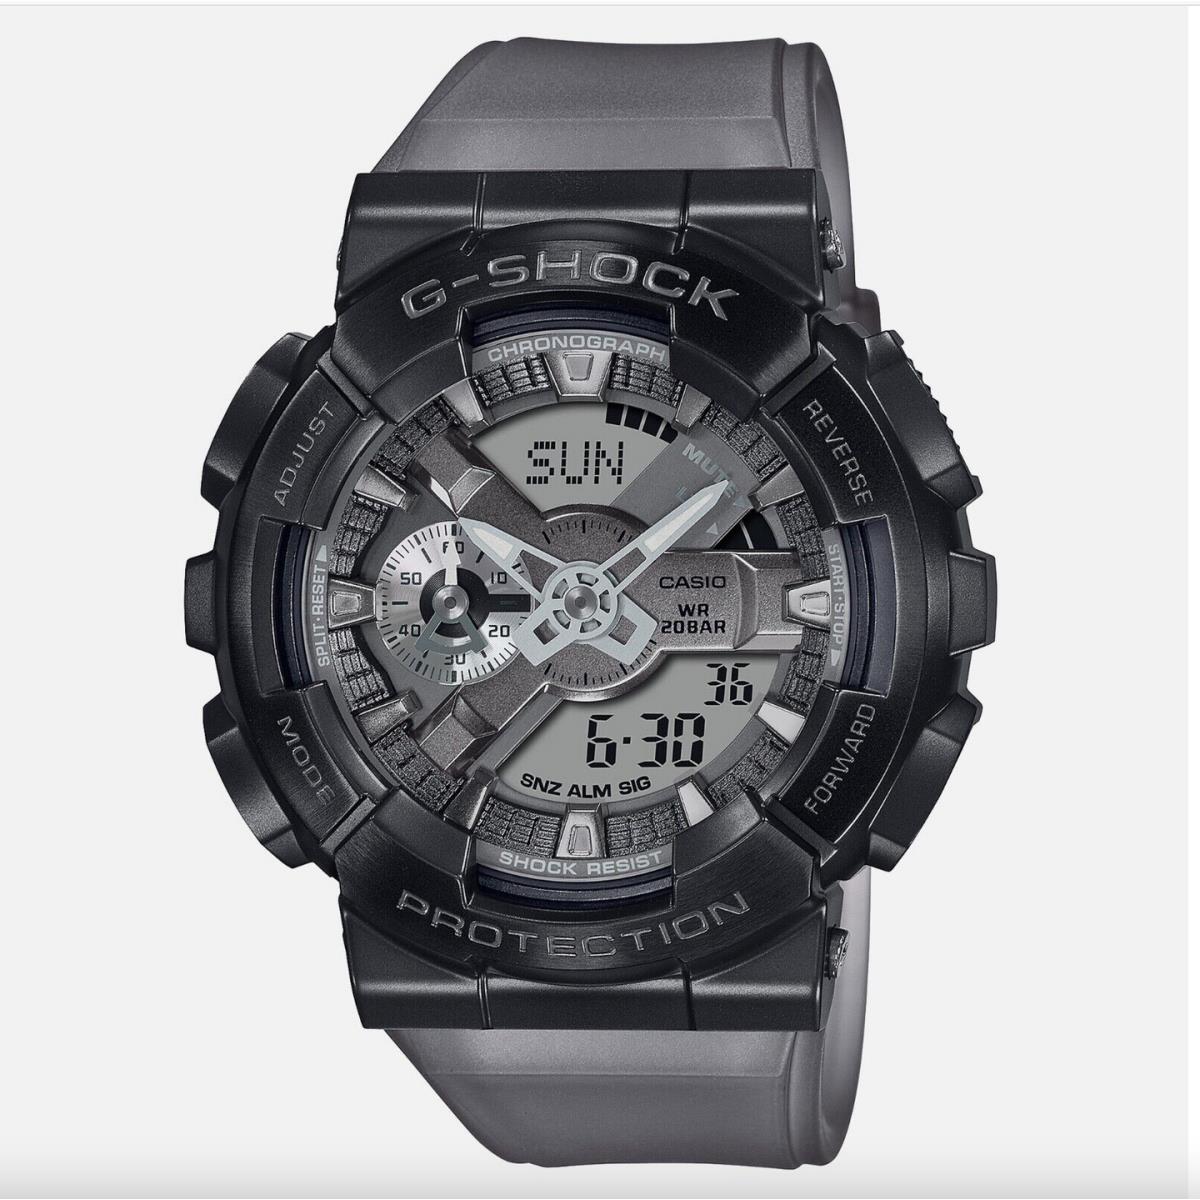 Casio G-shock Limited Edition Ana-digi Matte Black Bezel Watch GM110MF-1A - Dial: Gray, Band: Translucent Gray, Bezel: Matte Black